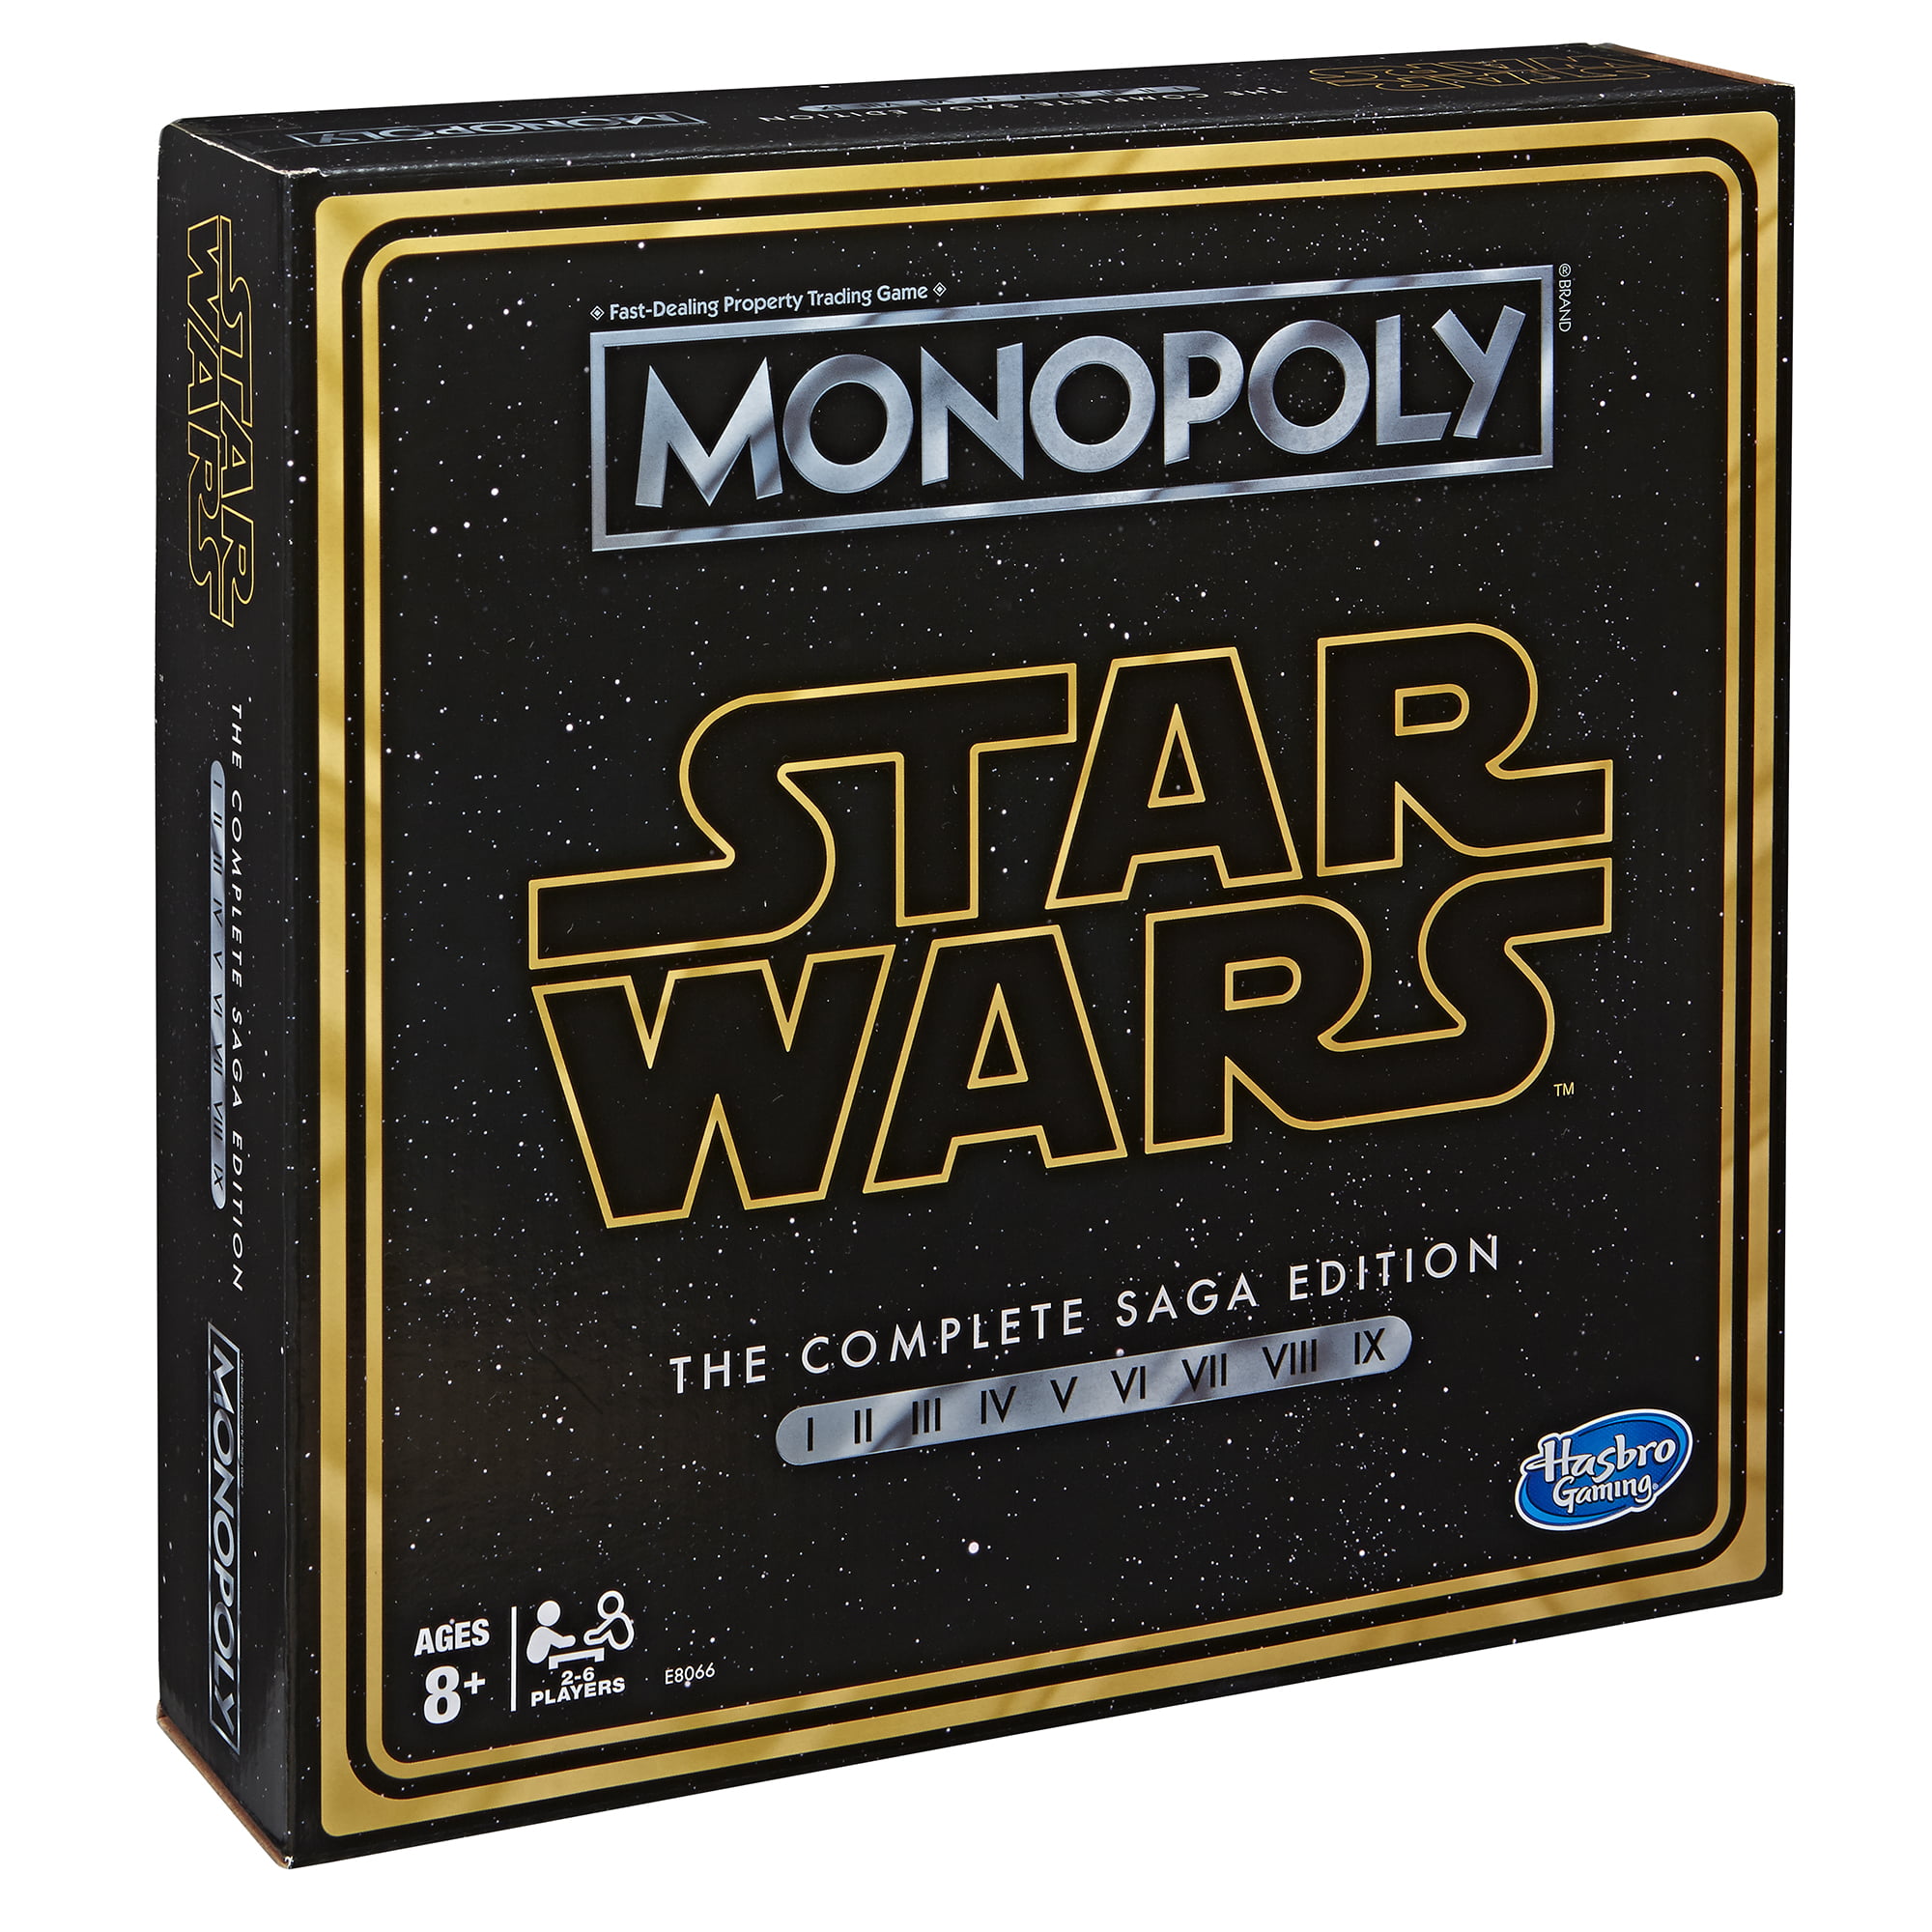 Monopoly Star Wars Complete Saga Edition Board Game Walmart Com Walmart Com